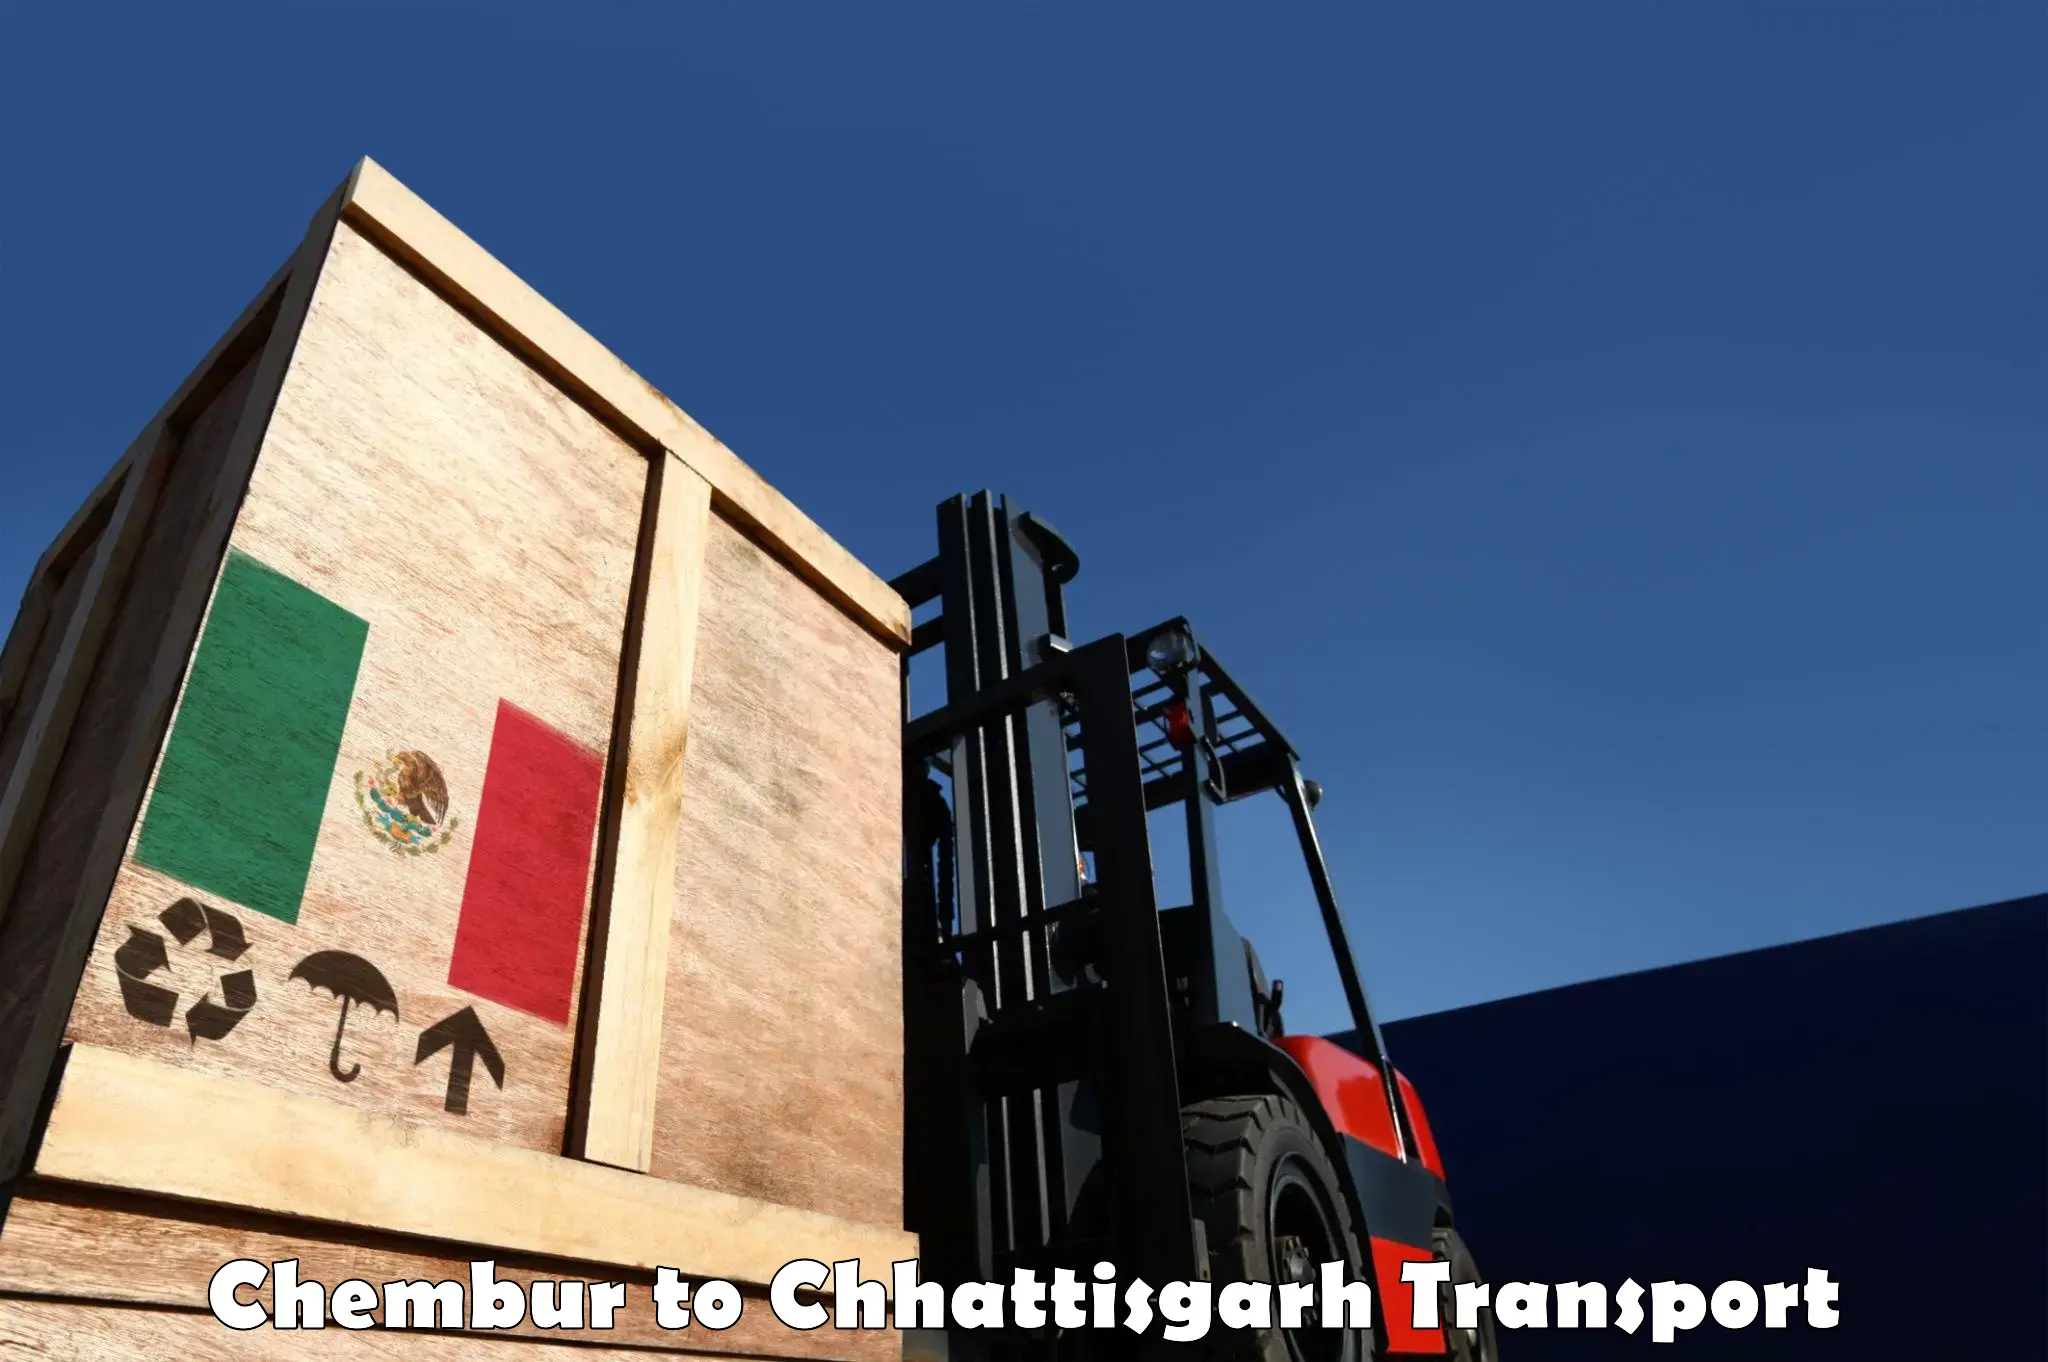 Truck transport companies in India Chembur to Berla